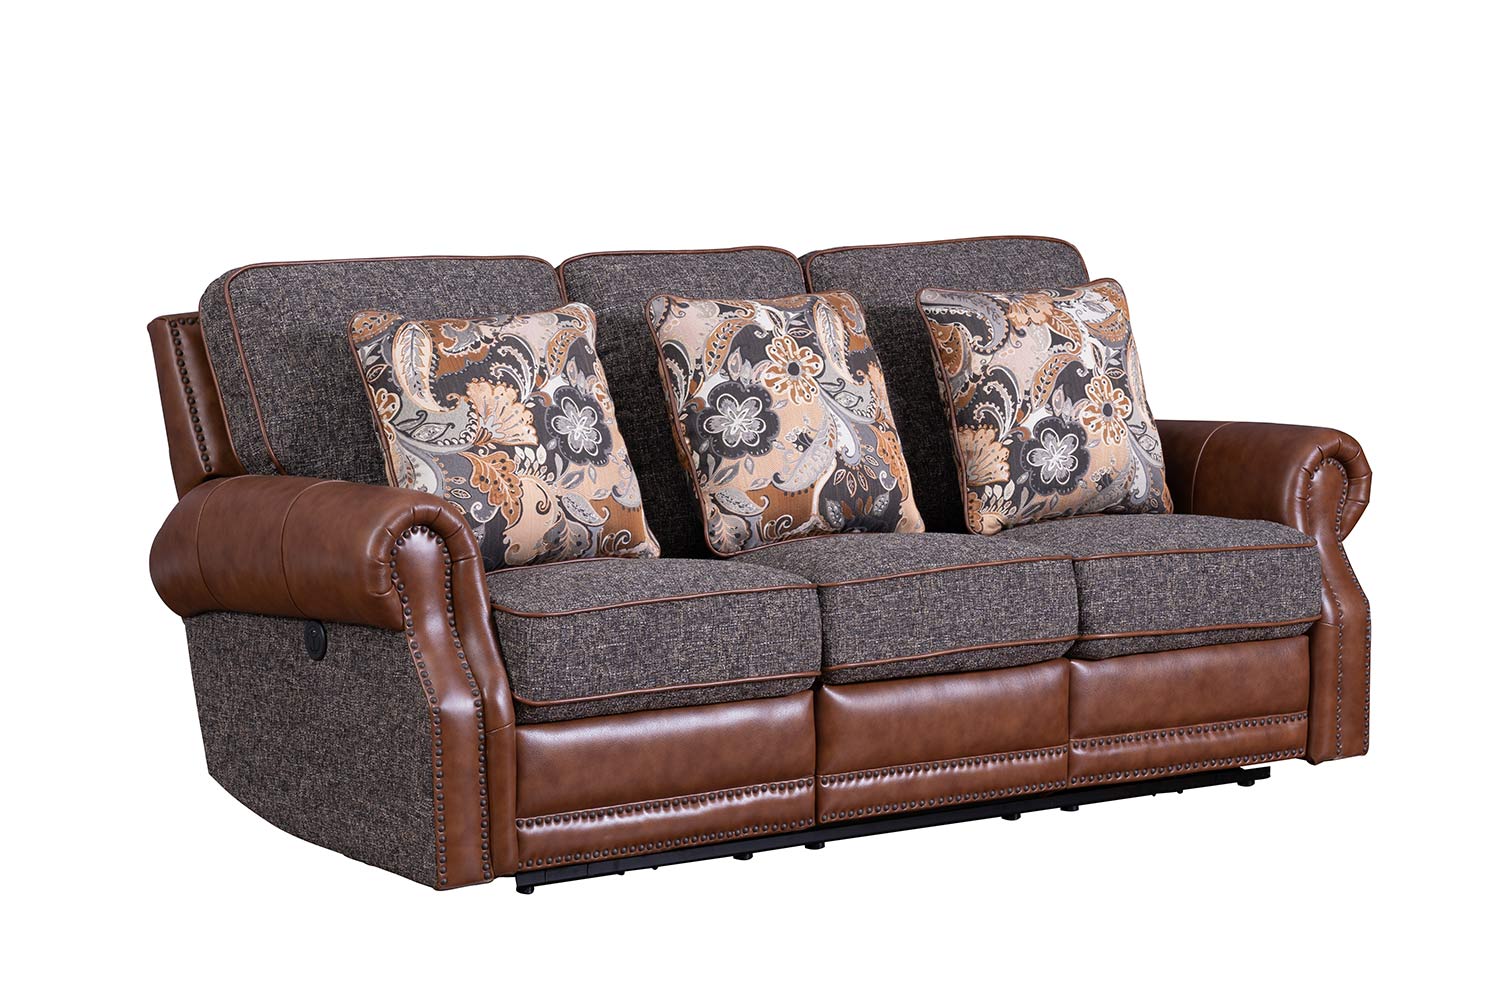 Barcalounger Jefferson Power Reclining Sofa - Ryegate Tawny all leather/Eddystone Arabica fabric